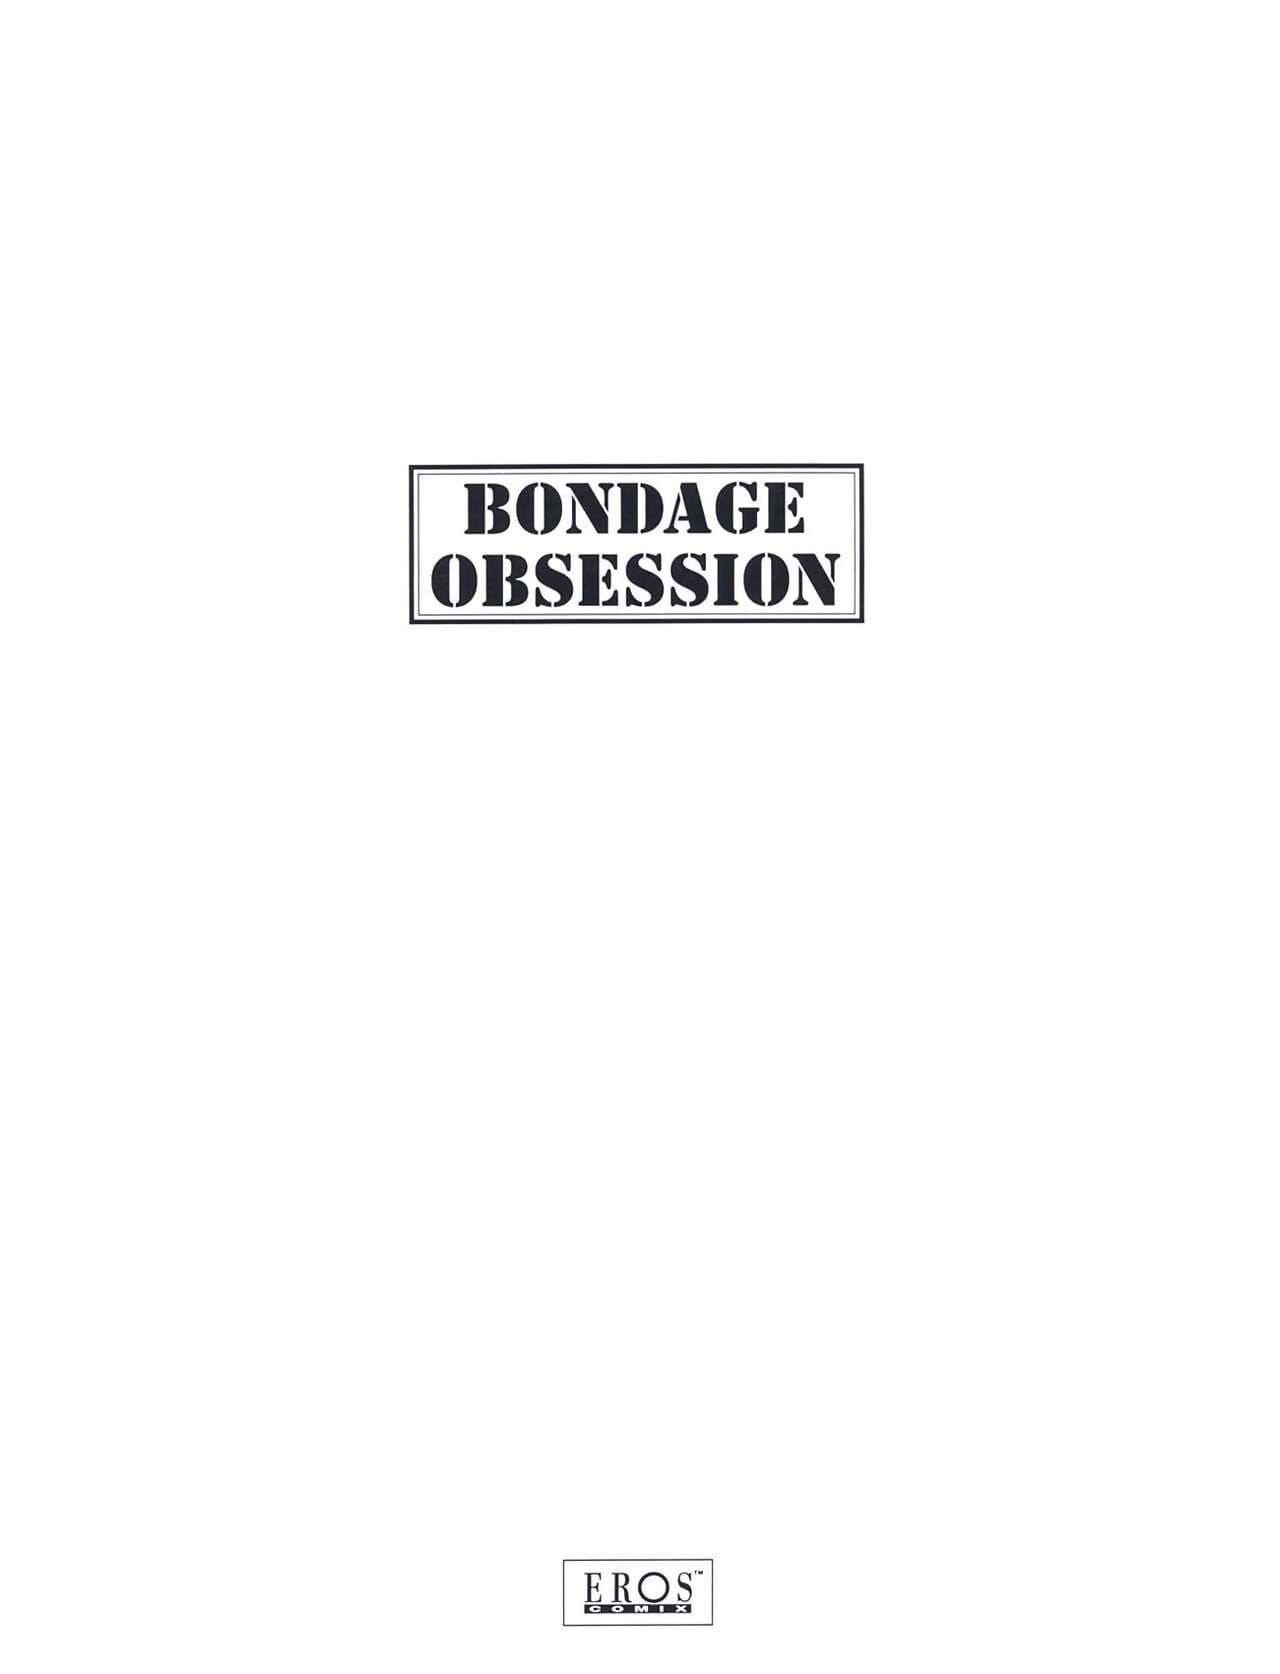 Bondage Obsession #1 page 1